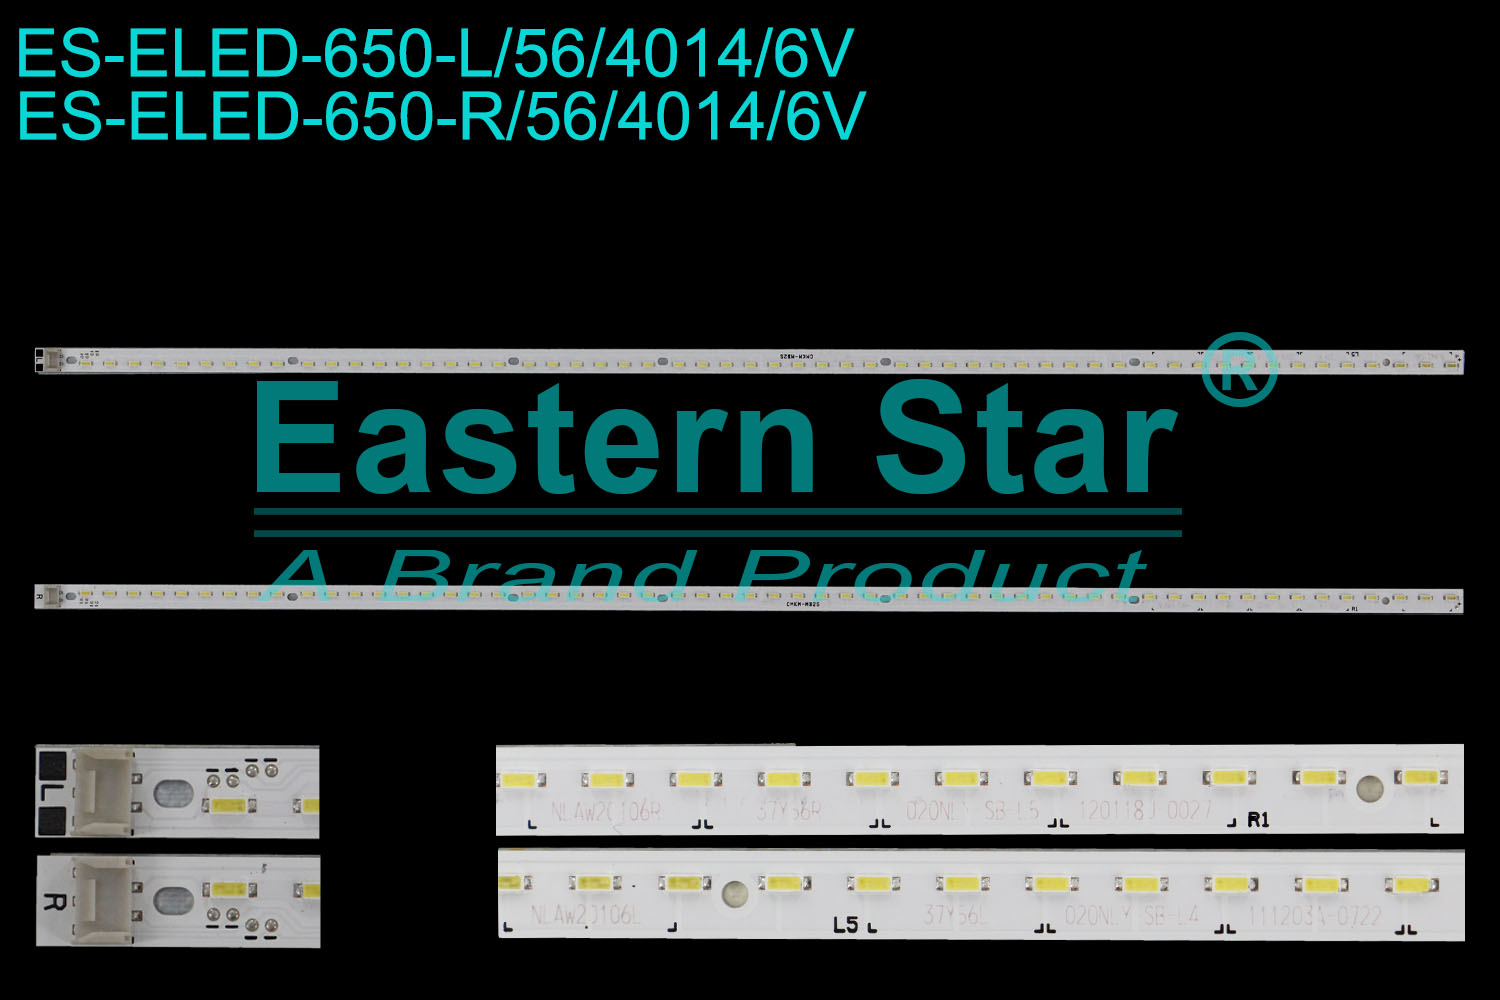 ES-ELED-650 ELED/EDGE TV backlight use for 37'' Lg  L: NLAW20106L 37Y56L 020NLY-SB-L4 111203A-0722,  R:NLAW20106L 37Y56L 020NLY-SB-L4 111203A-0722 LED STRIPS (2)